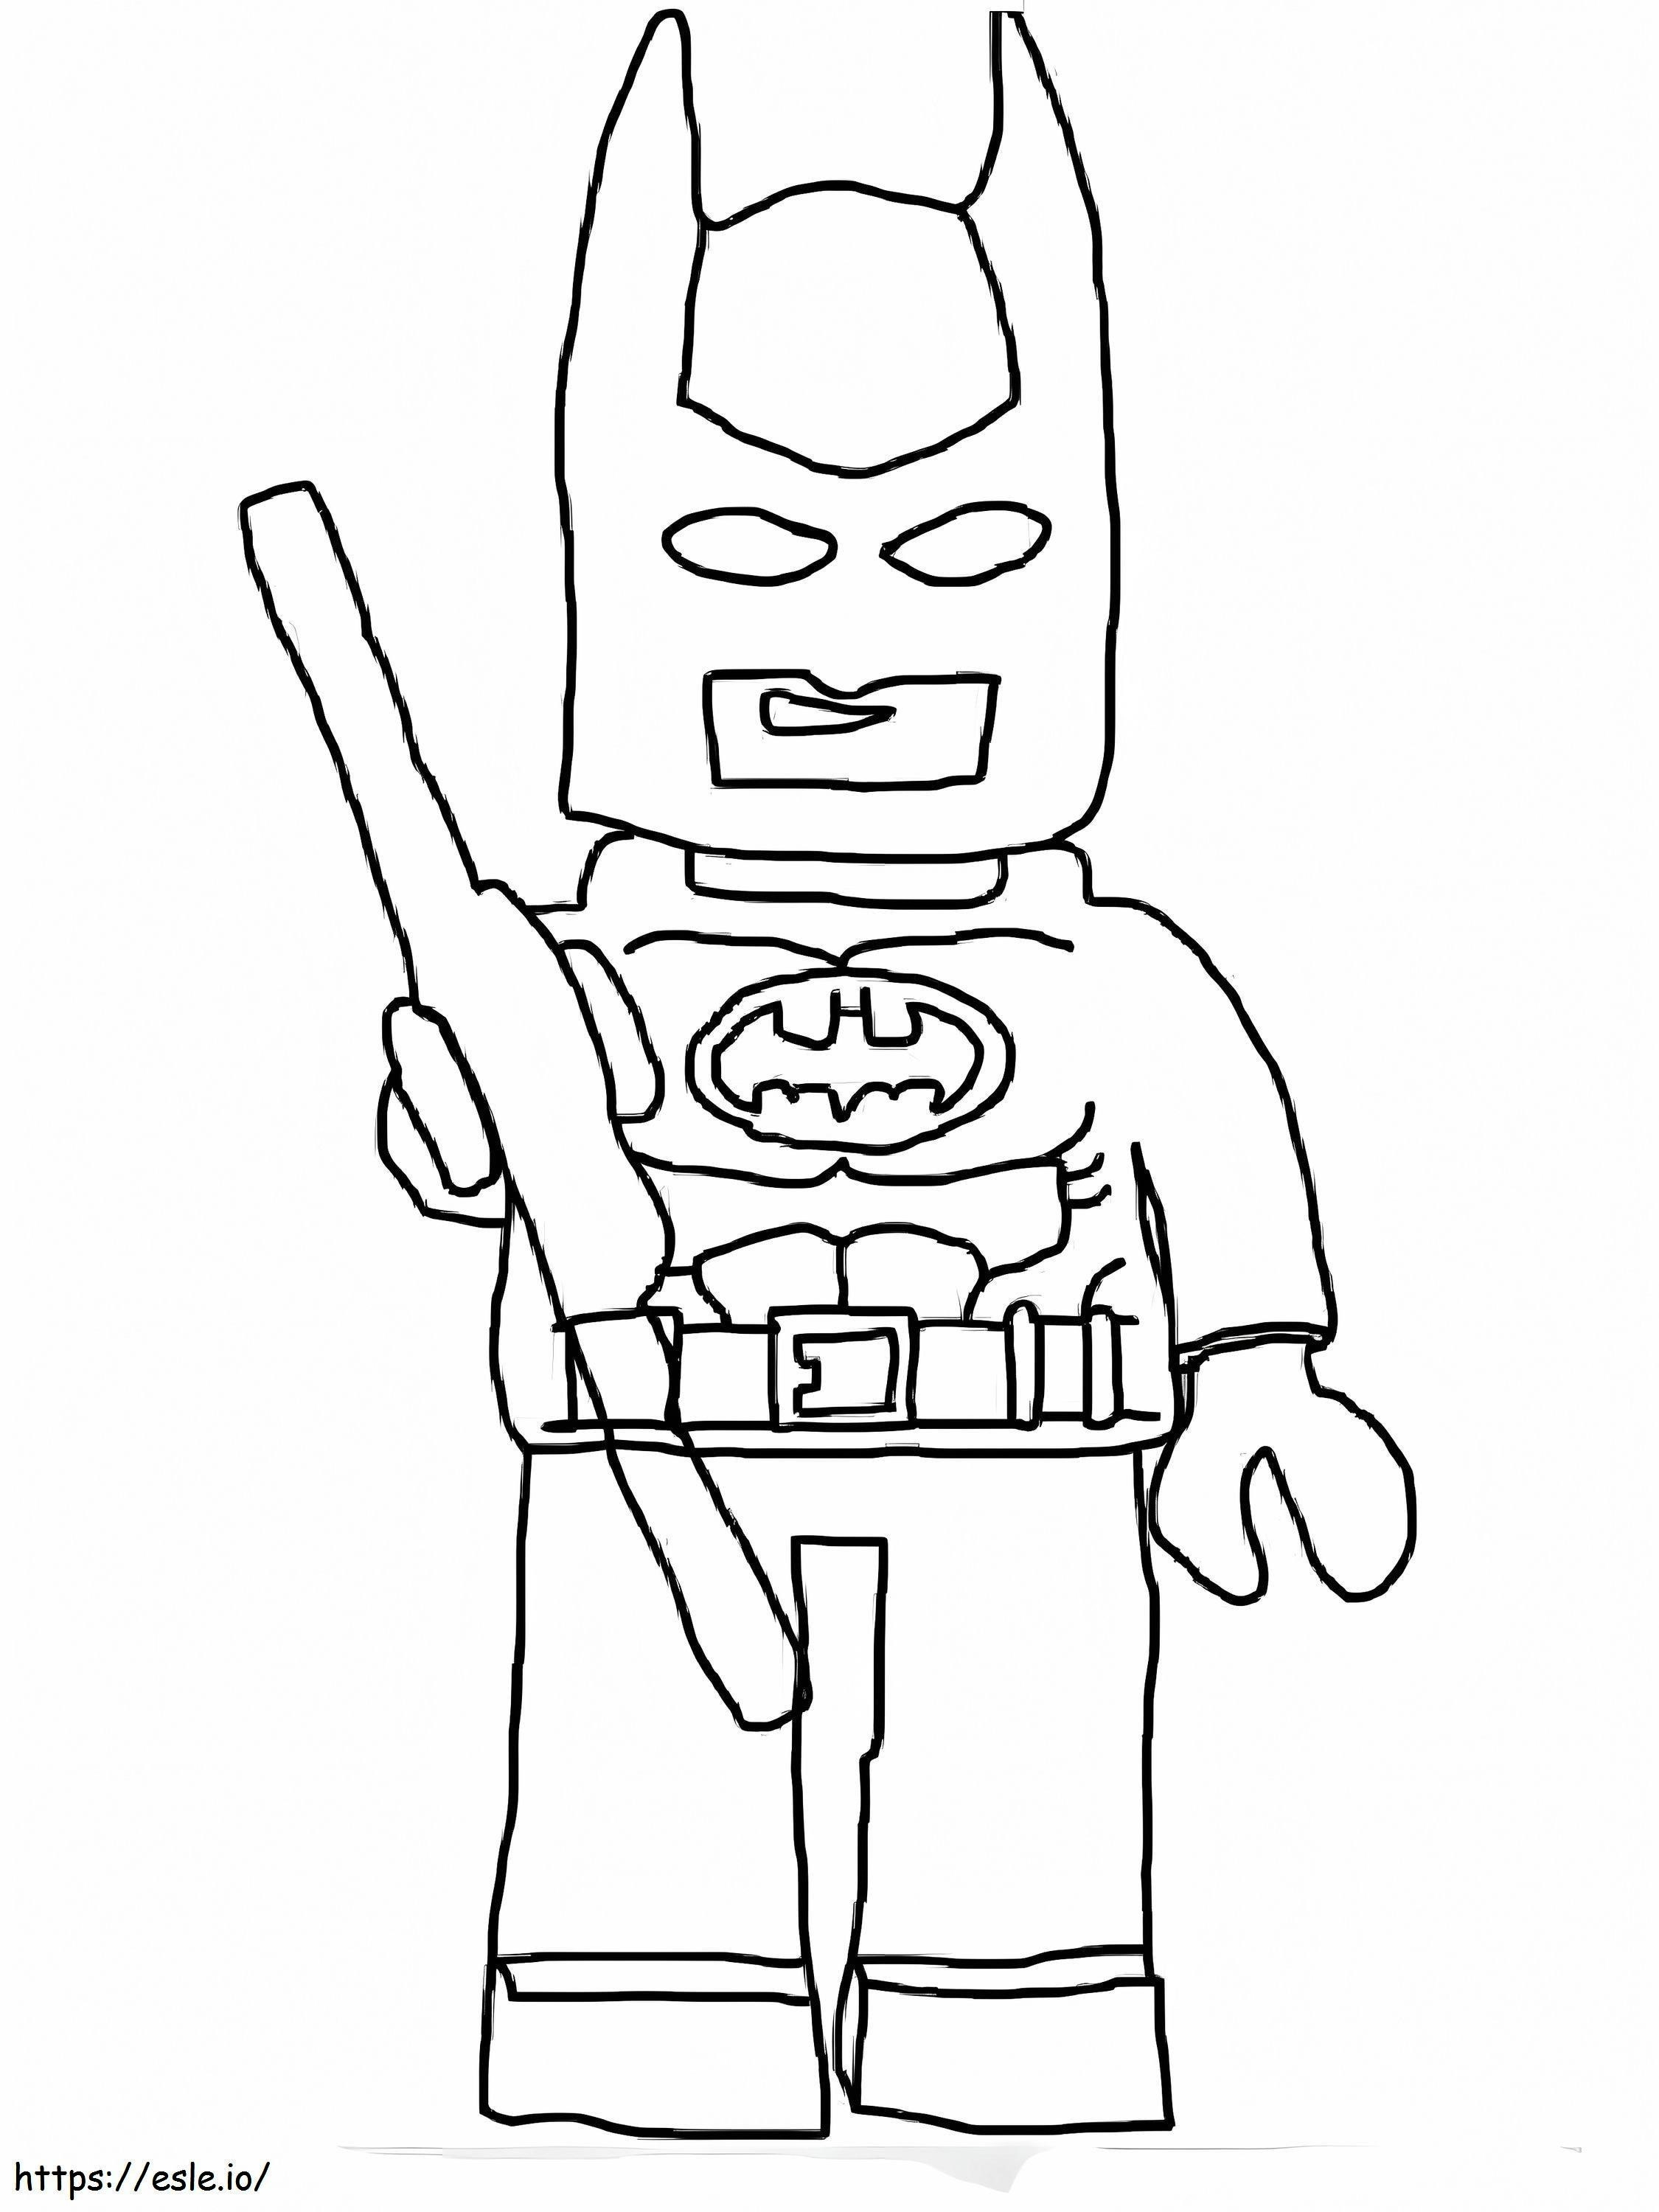 Dibuja a Batman sosteniendo un palo para colorear